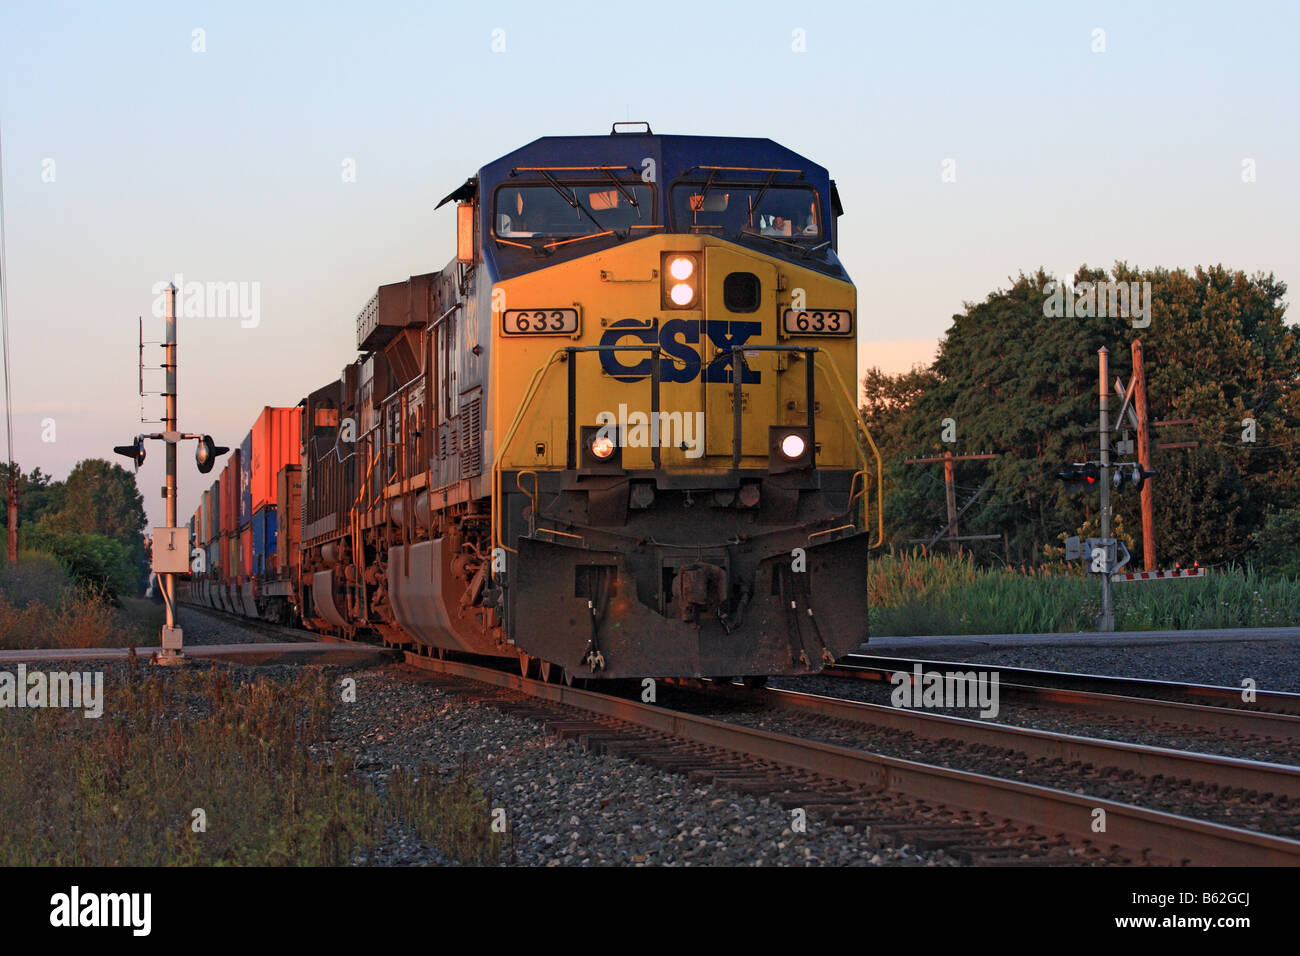 CSX locomotive number 633 pulling a train in Harborcreek, Pennsylvania, USA. Stock Photo